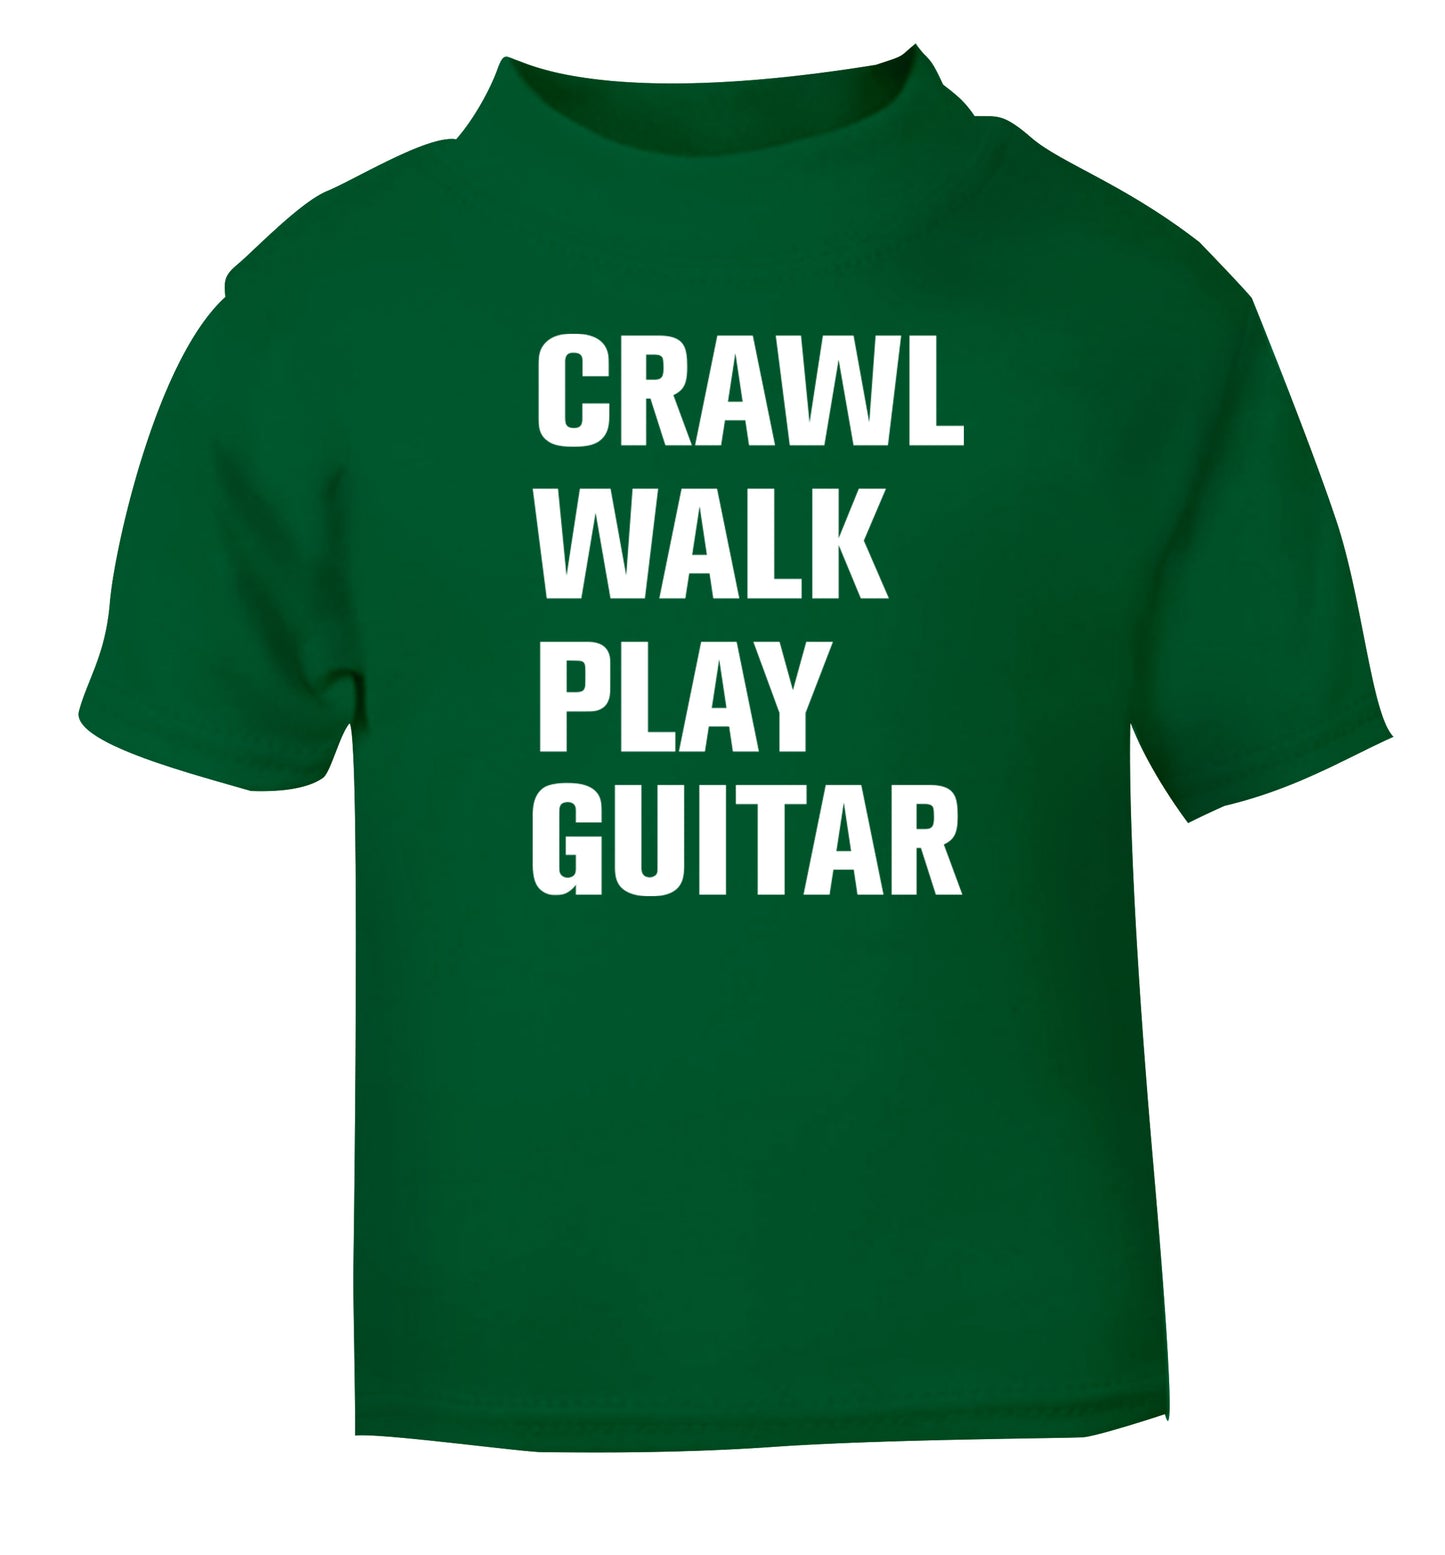 Crawl walk play guitar green Baby Toddler Tshirt 2 Years